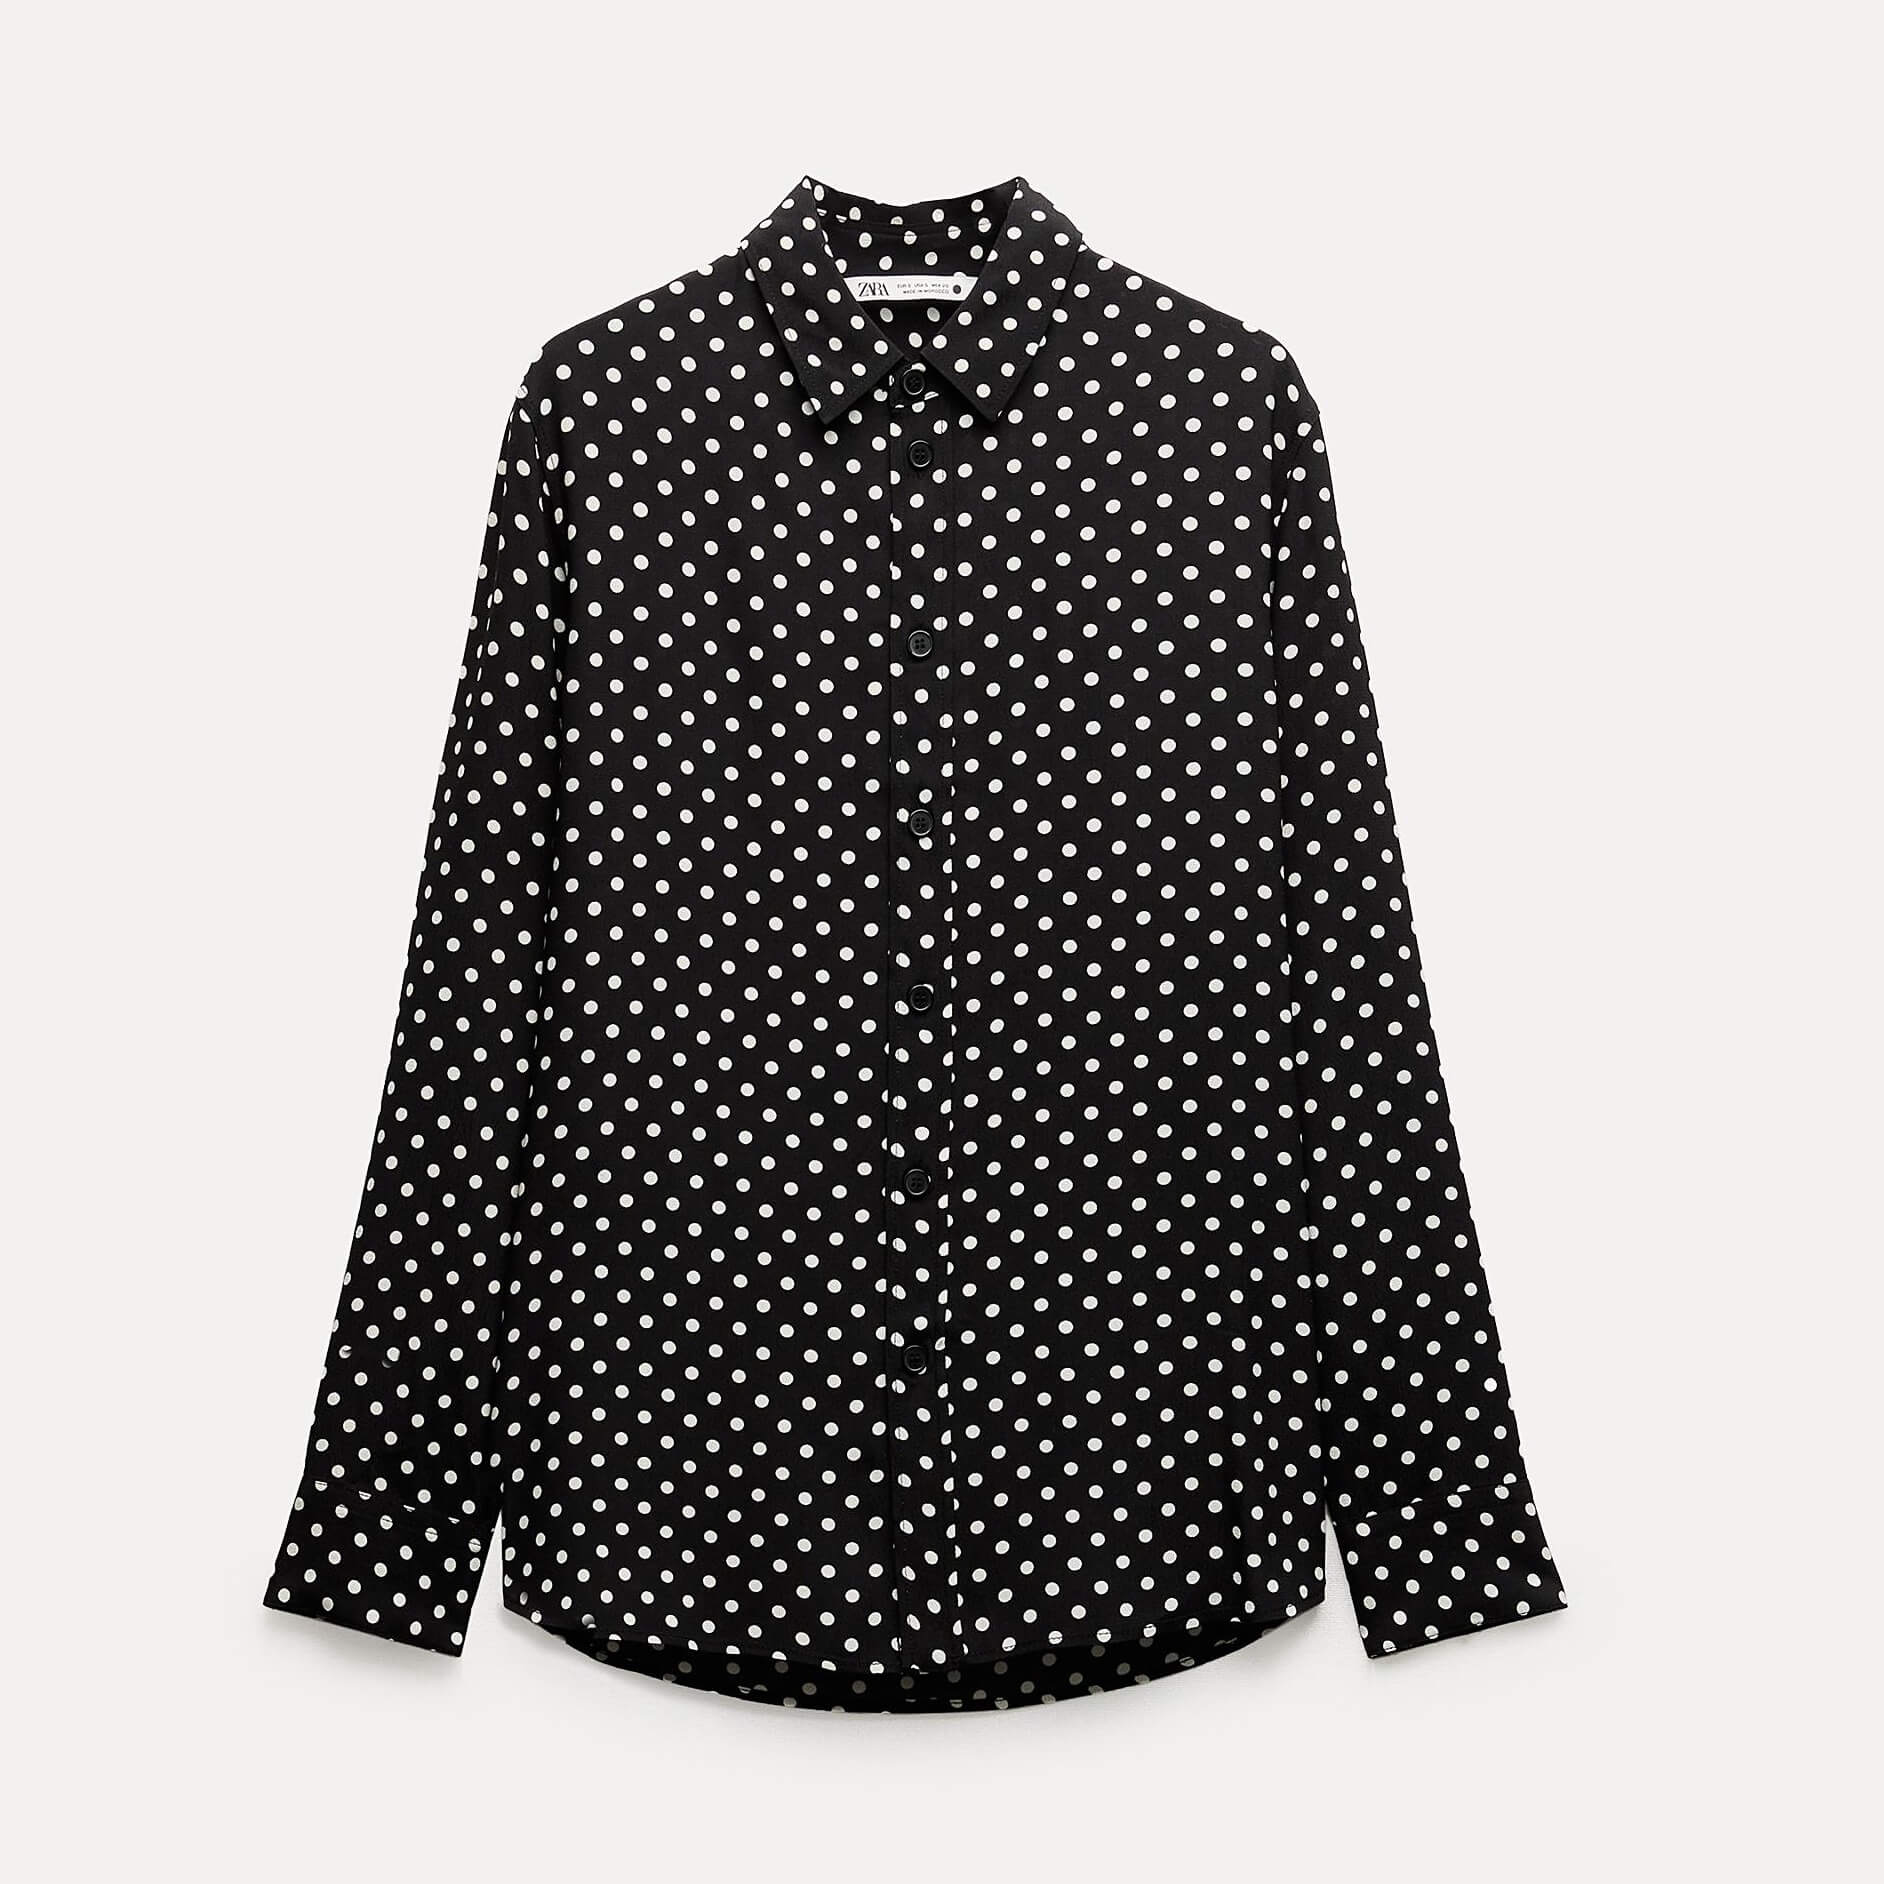 Рубашка Zara ZW Collection Polka Dot Print, черный/белый рубашка zara zw collection polka dot print белый черный